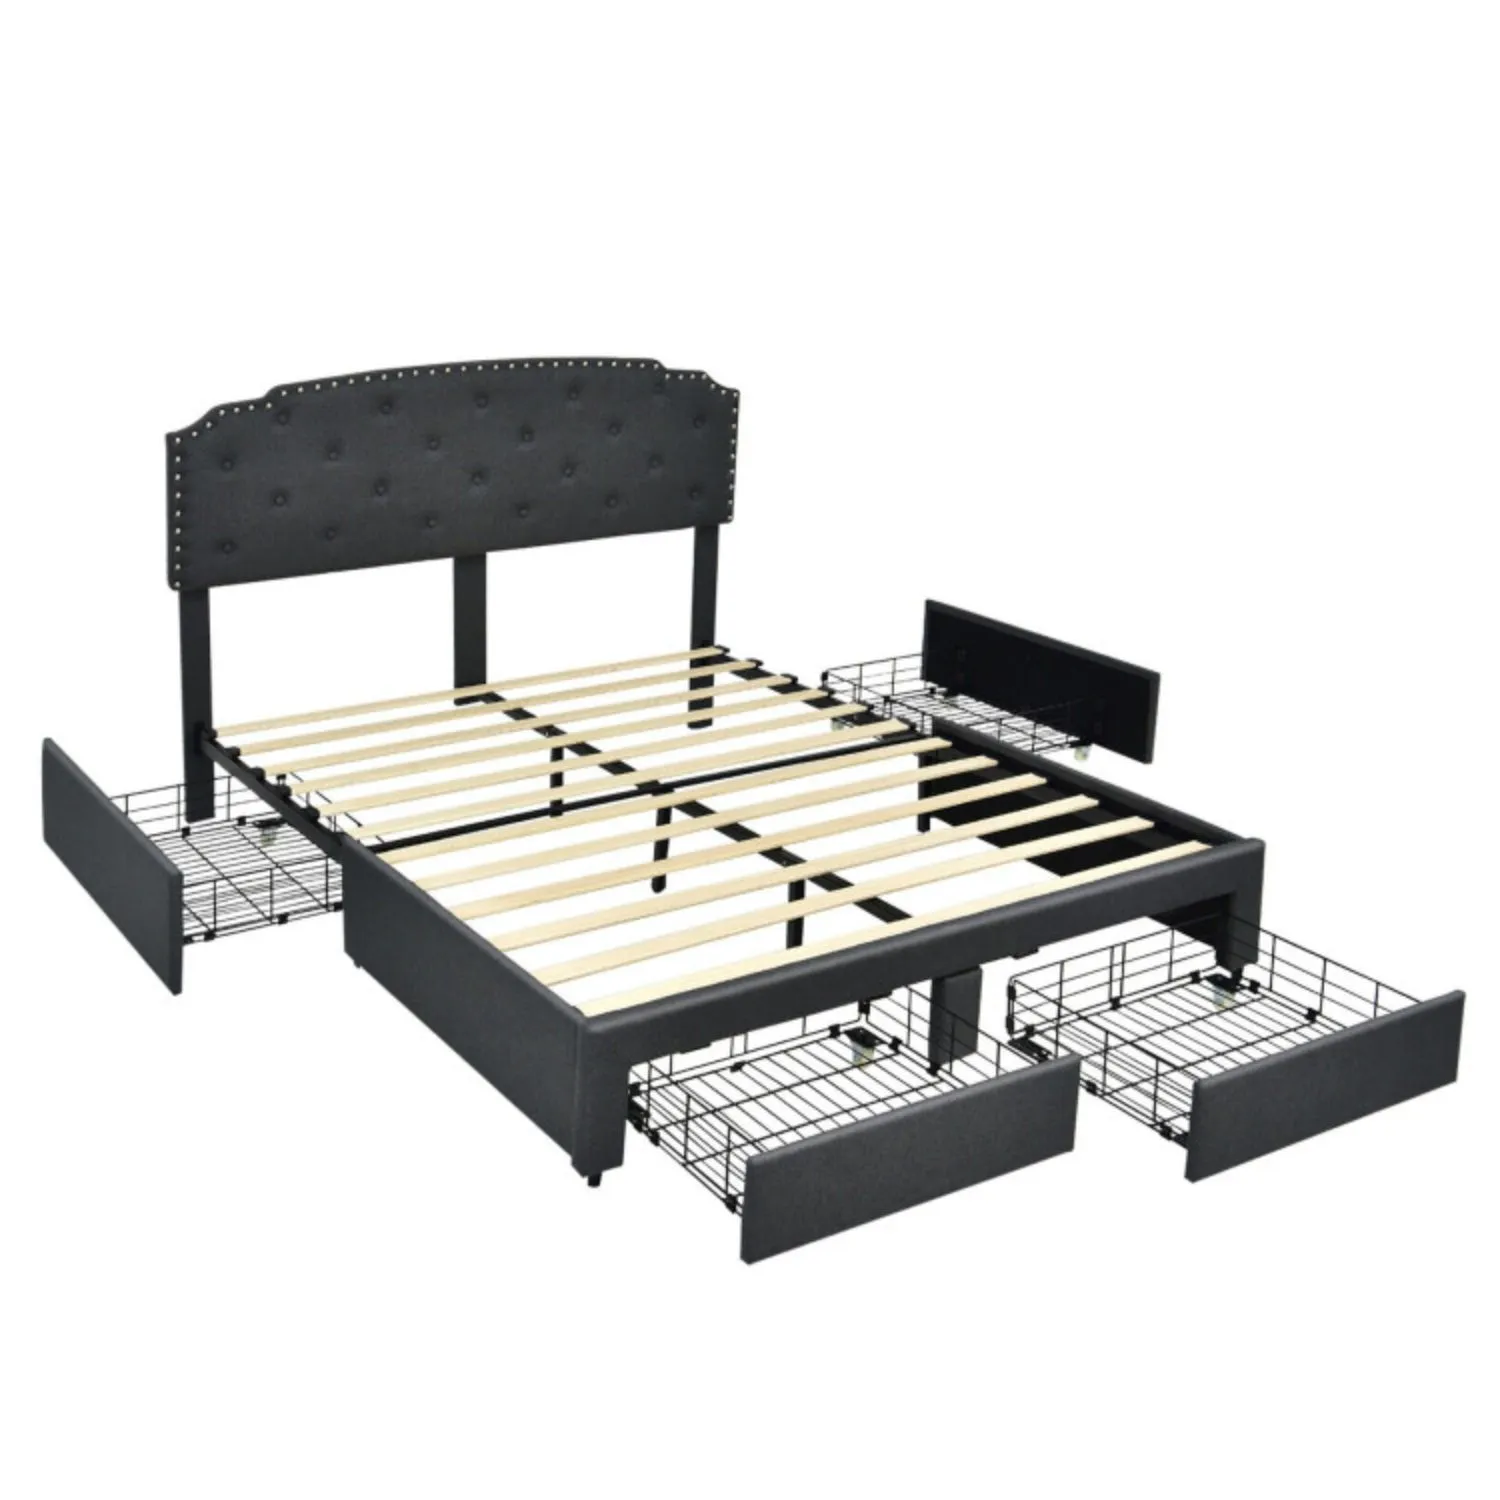 Platform Bed Frame with 4 Storage Drawers Adjustable Headboard